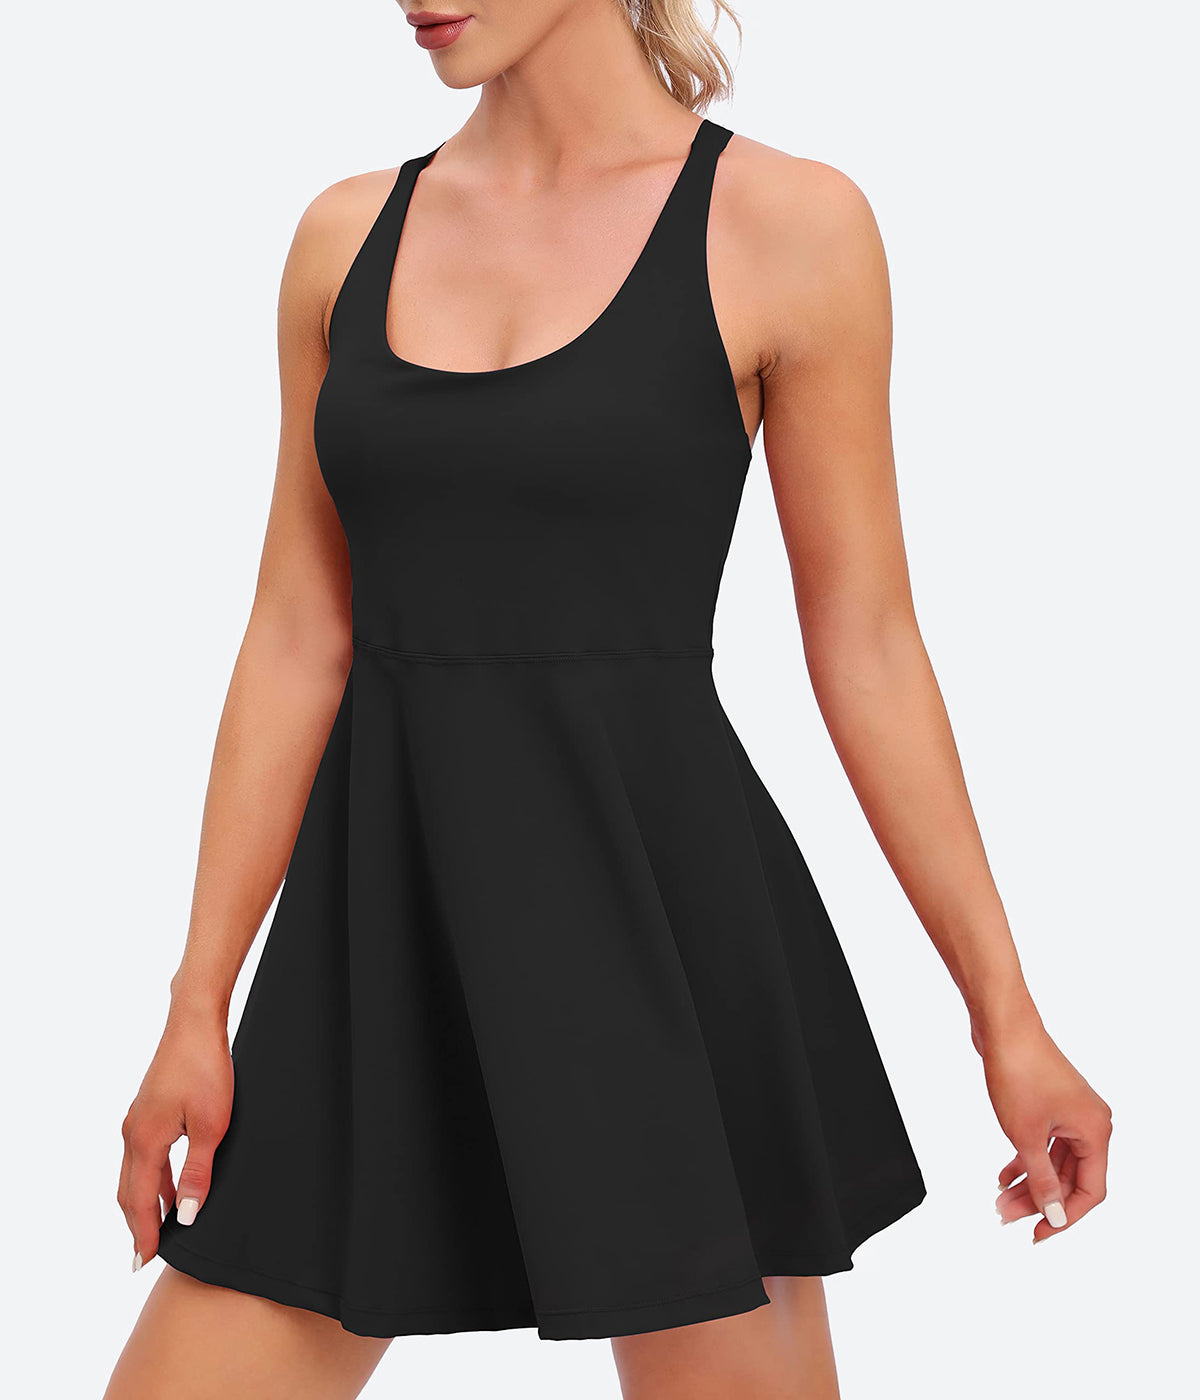 IUGA Tennis Dress With Built in Shorts & Bra - Mauve / XS